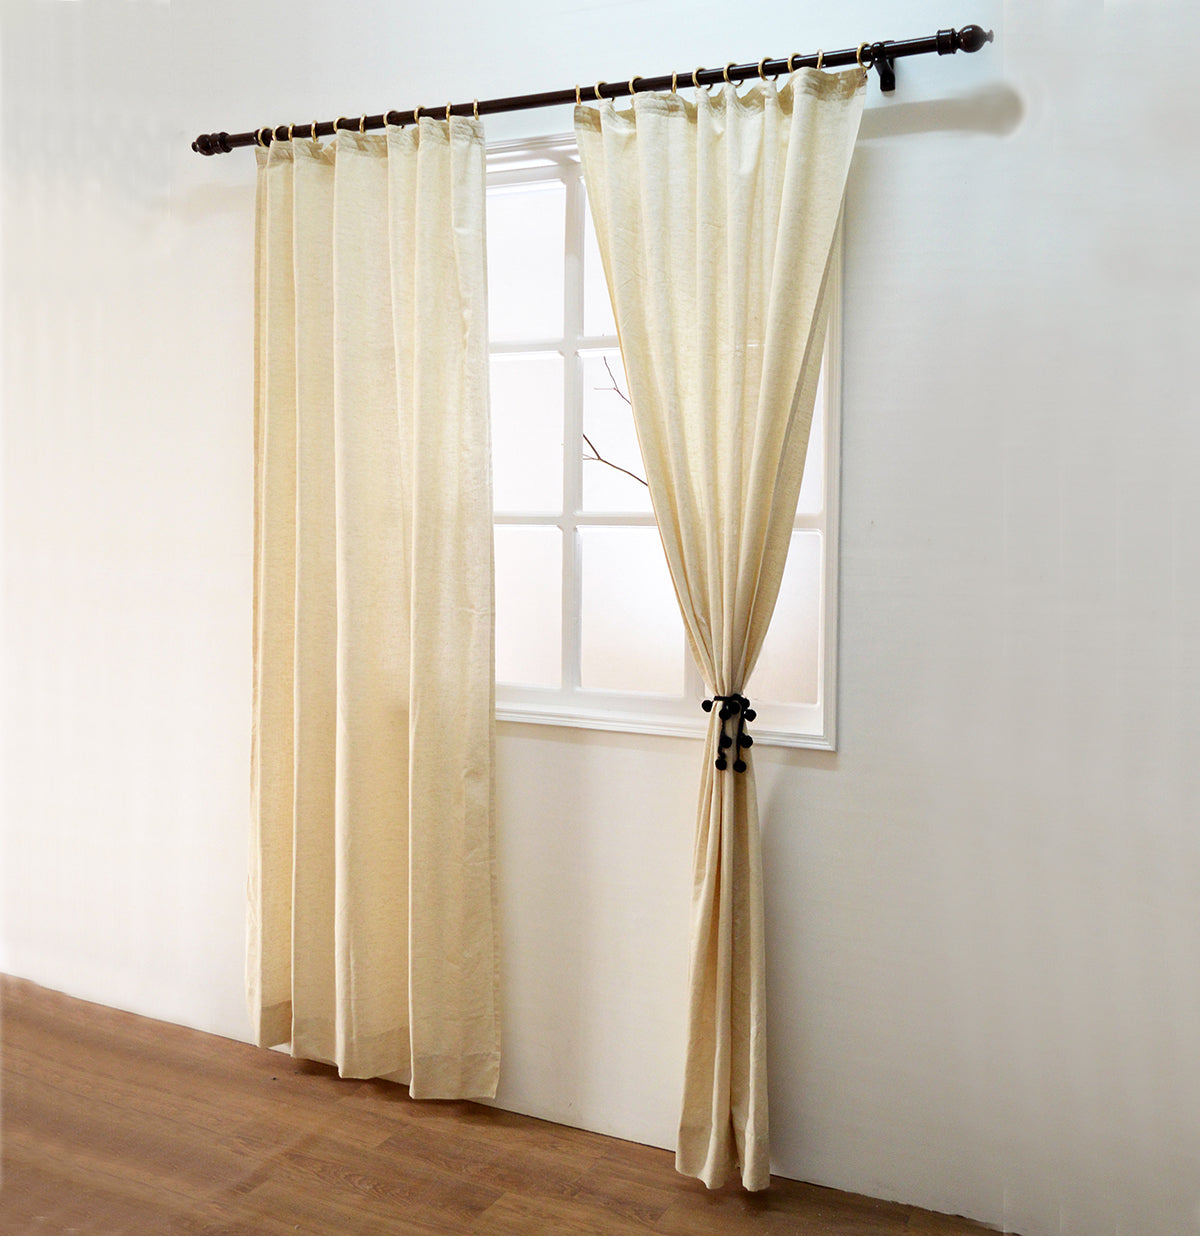 Natural colour curtain Panel, flex cotton fabric, sizes available